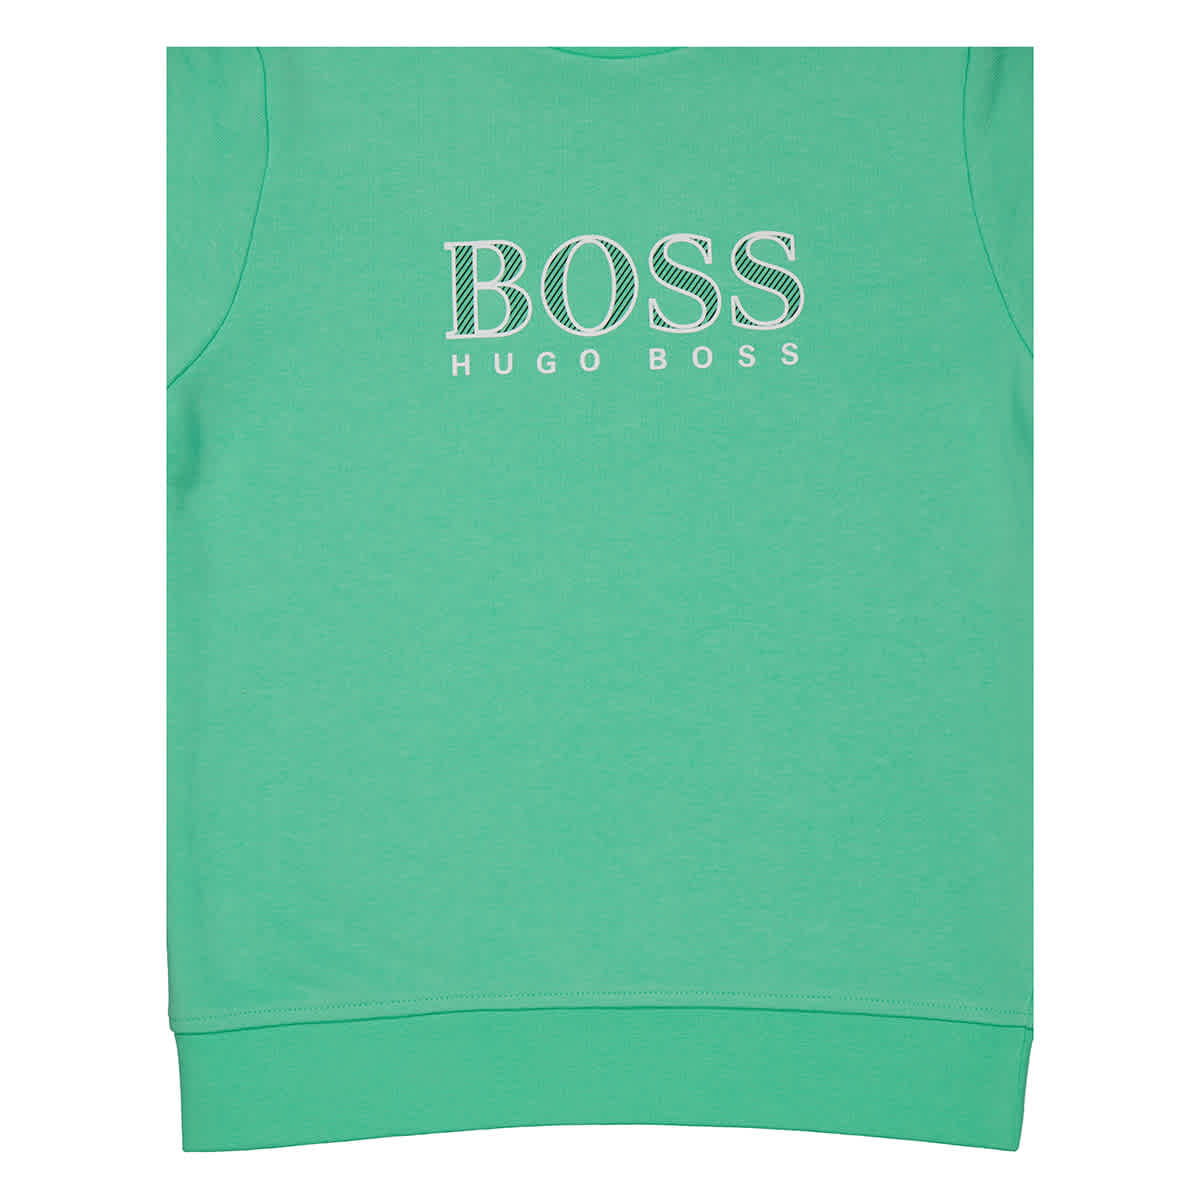 Boss Green Sweatshirt | ModeSens